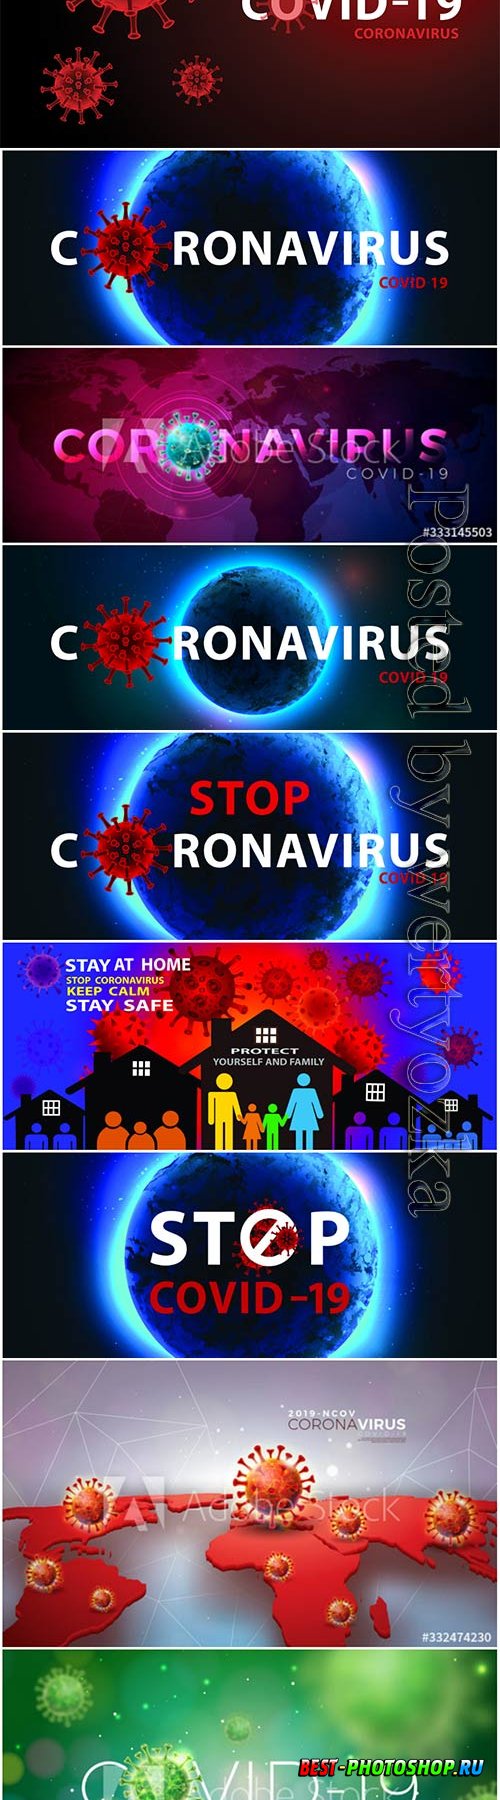 COVID 19, Coranavirus vector illustration sets # 28